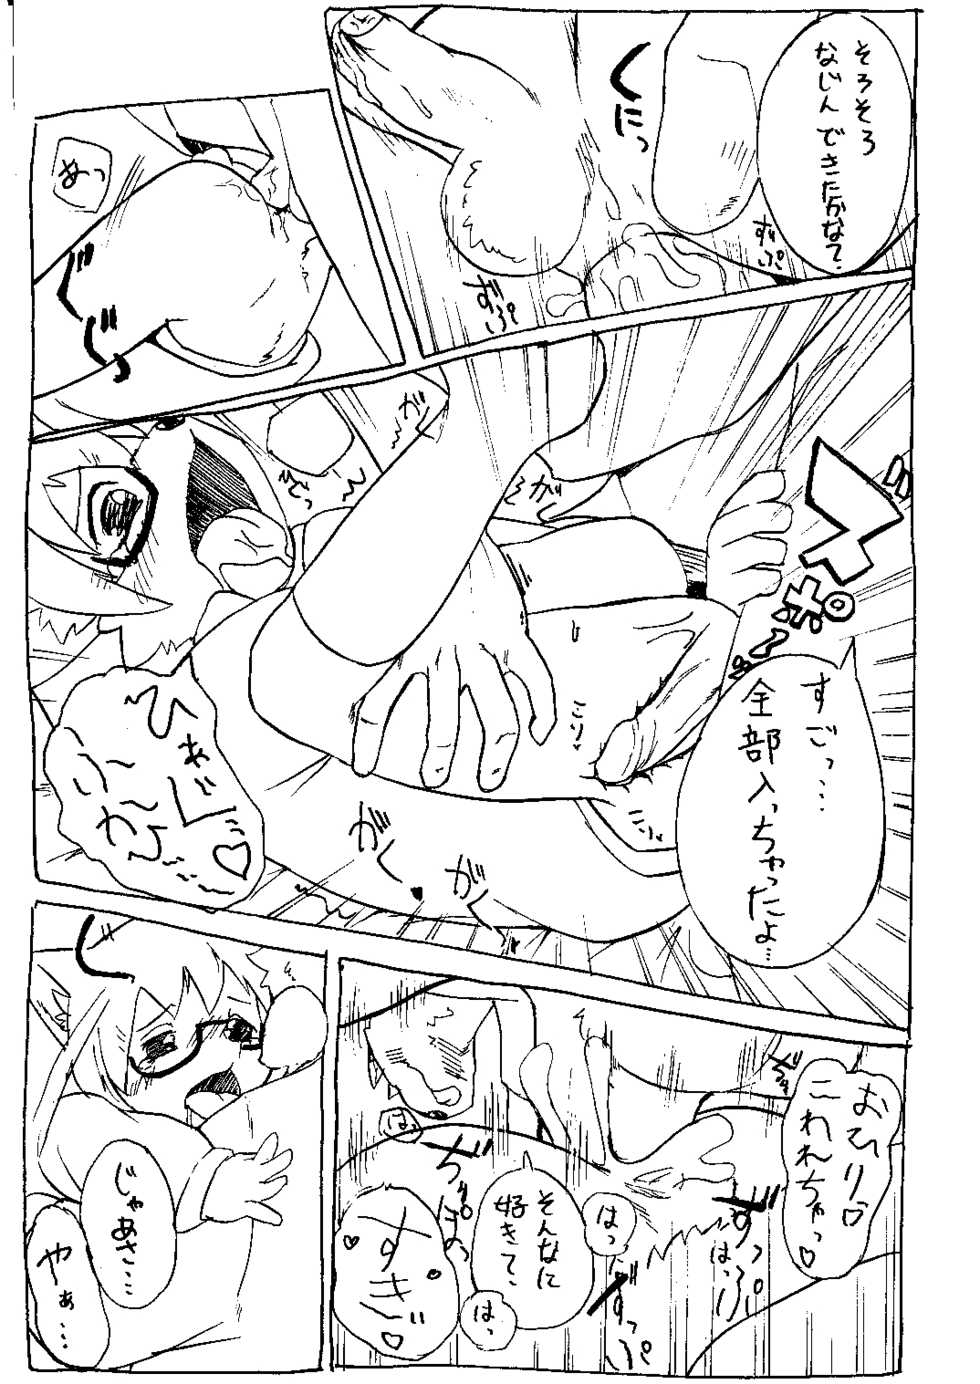 Marimo - ラクガキシリーズ - Page 14